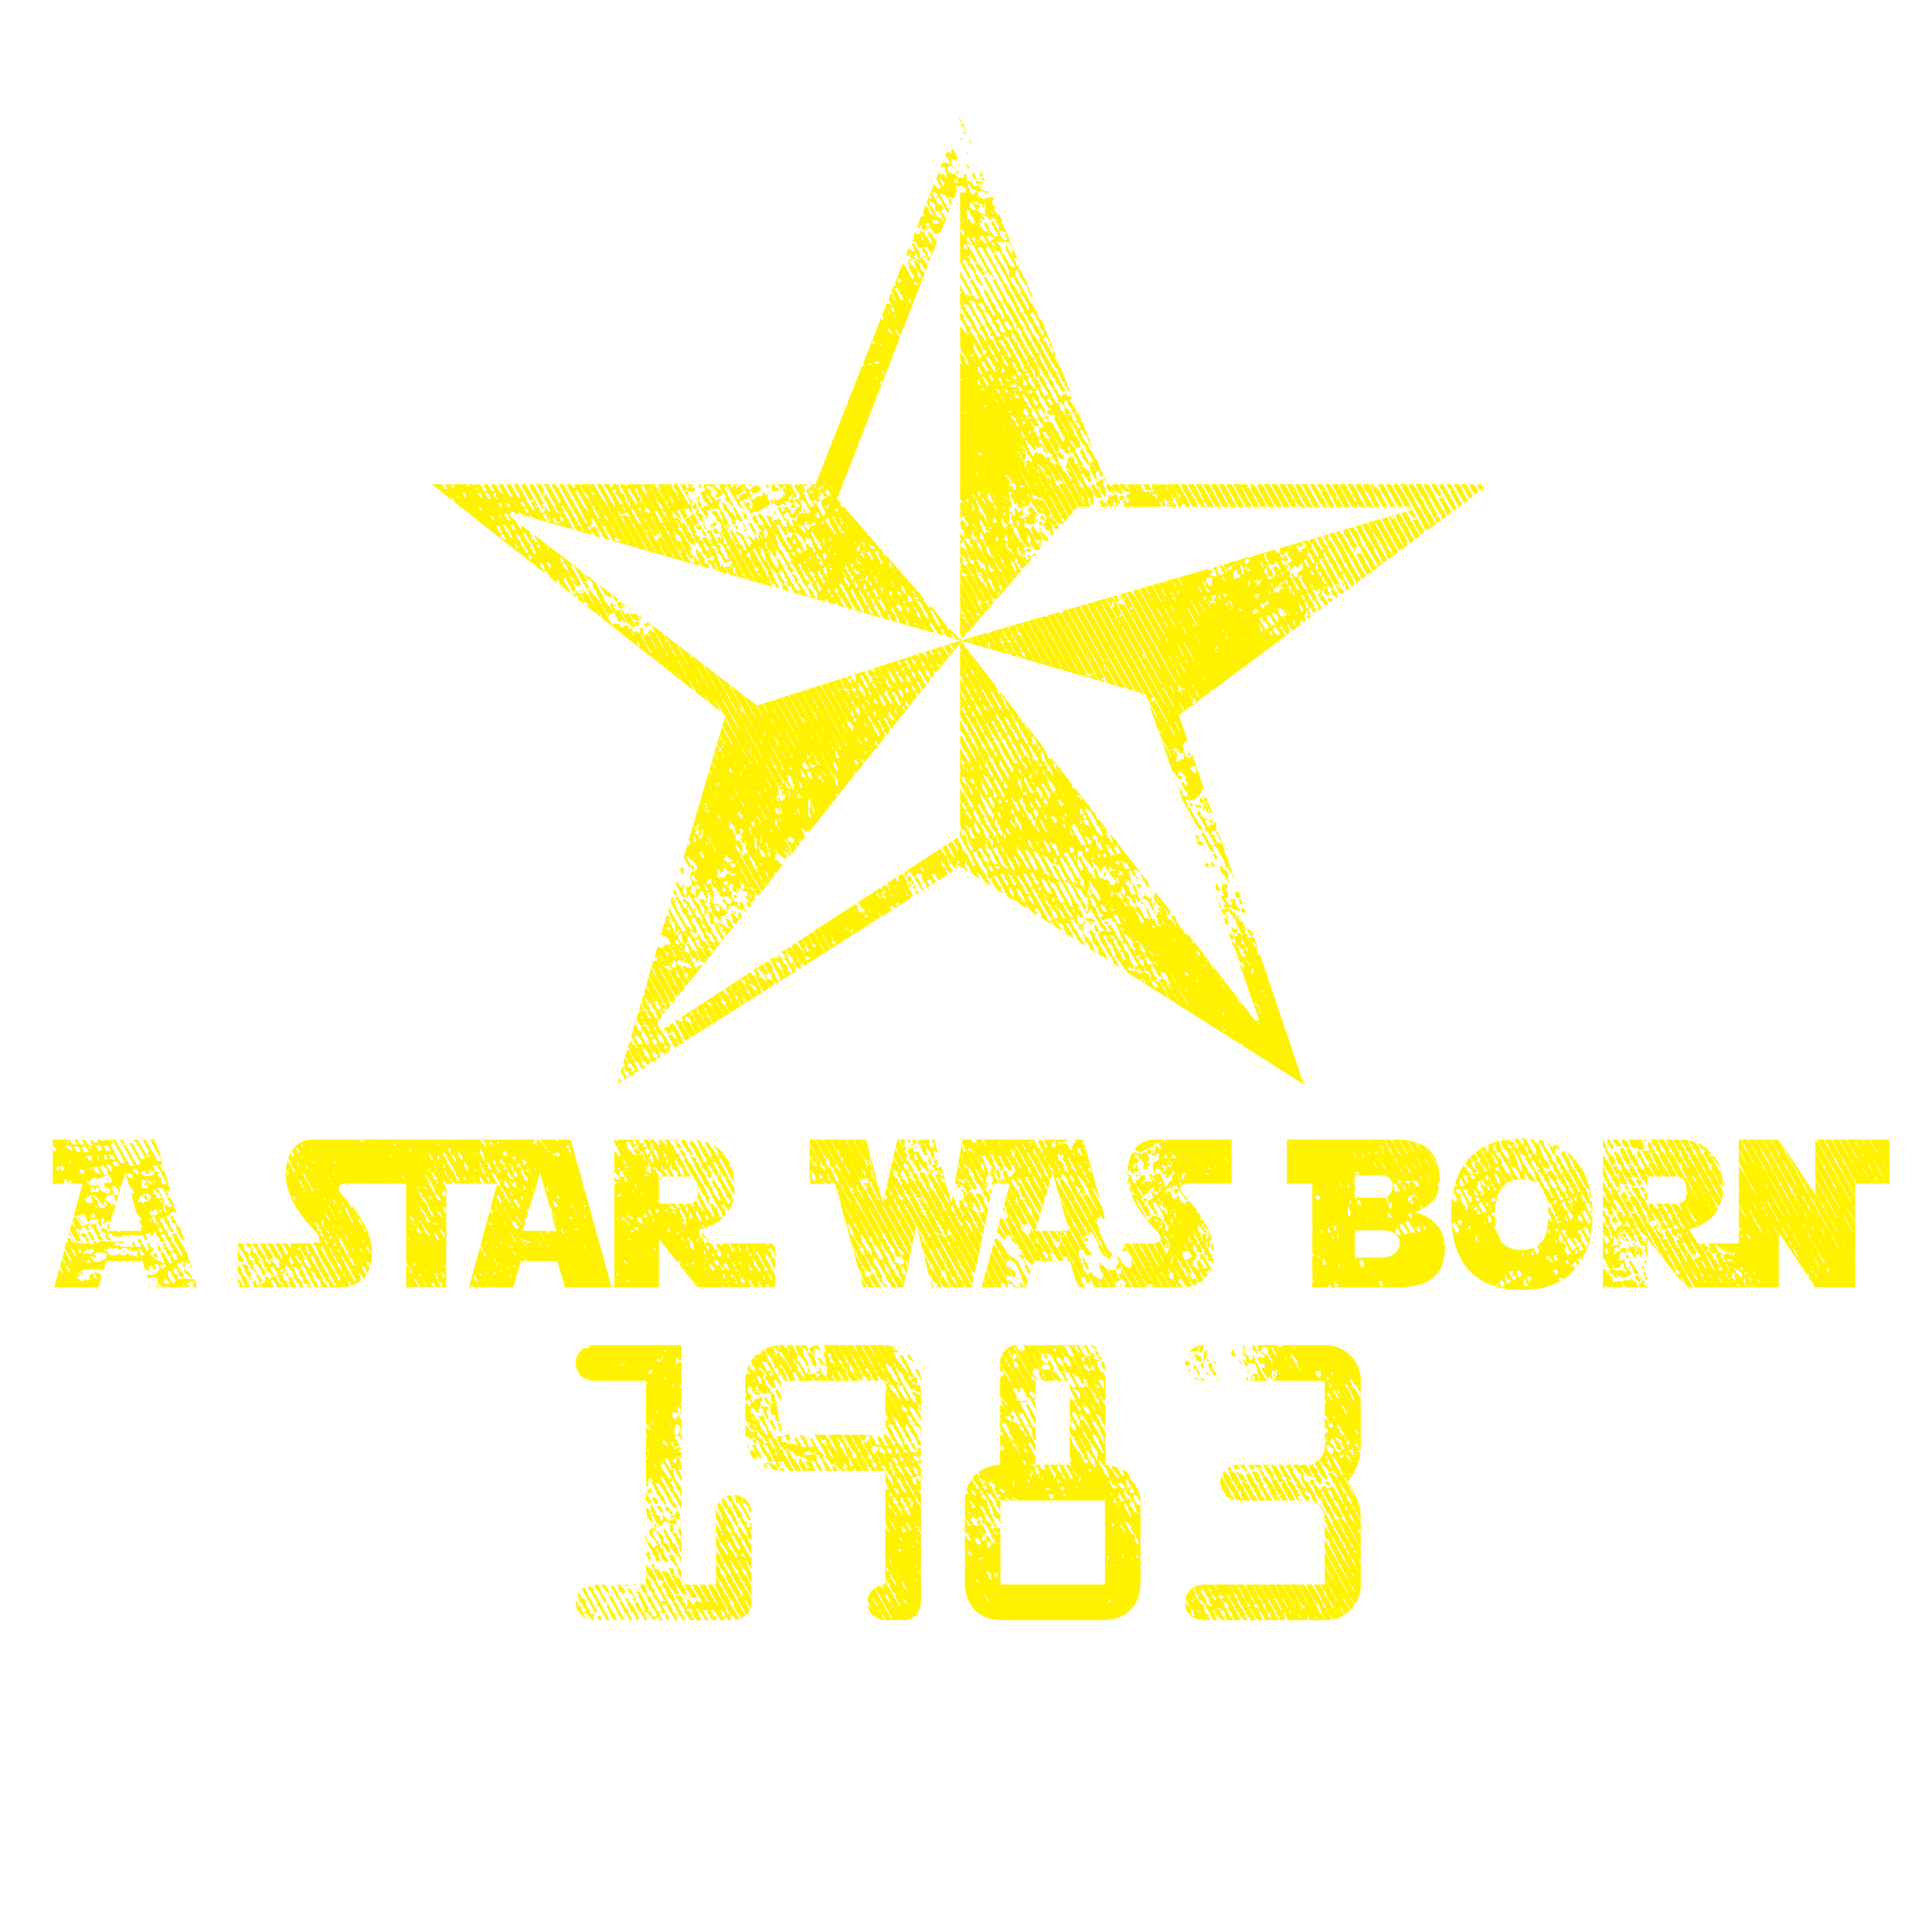 A Star was born